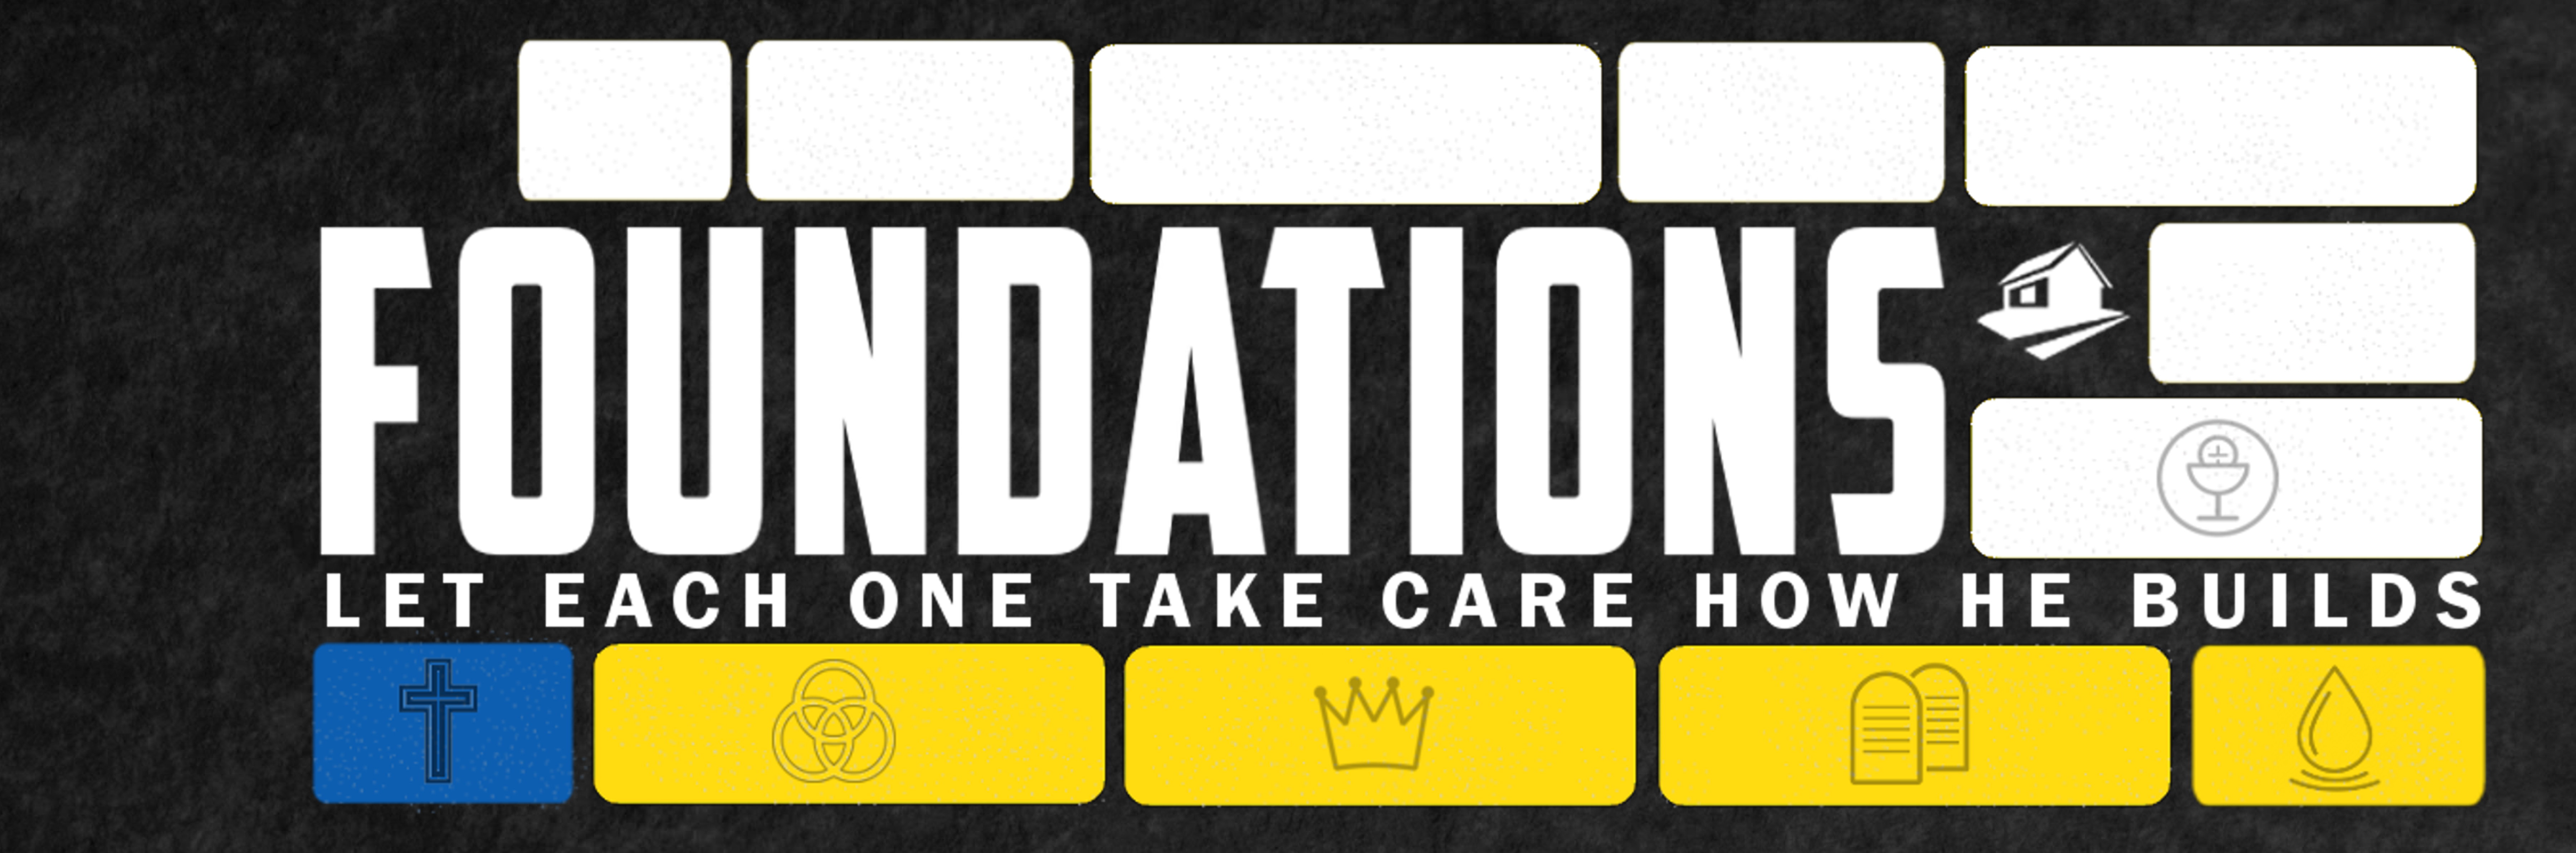 foundations-header-main image